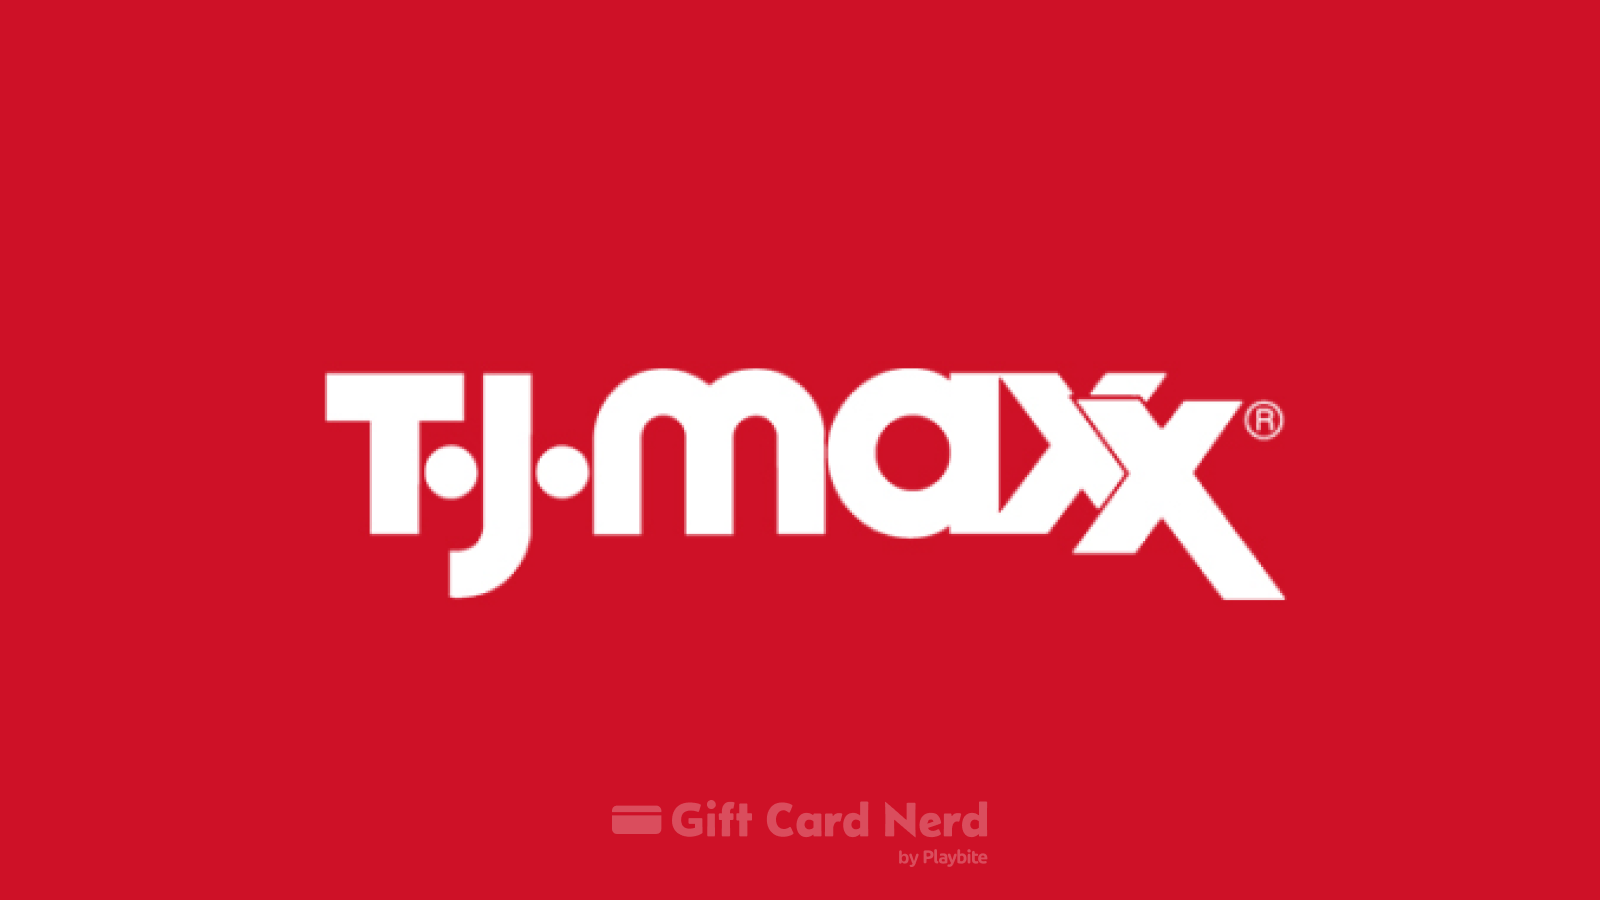 Can I use a TJ Maxx gift card on Amazon?